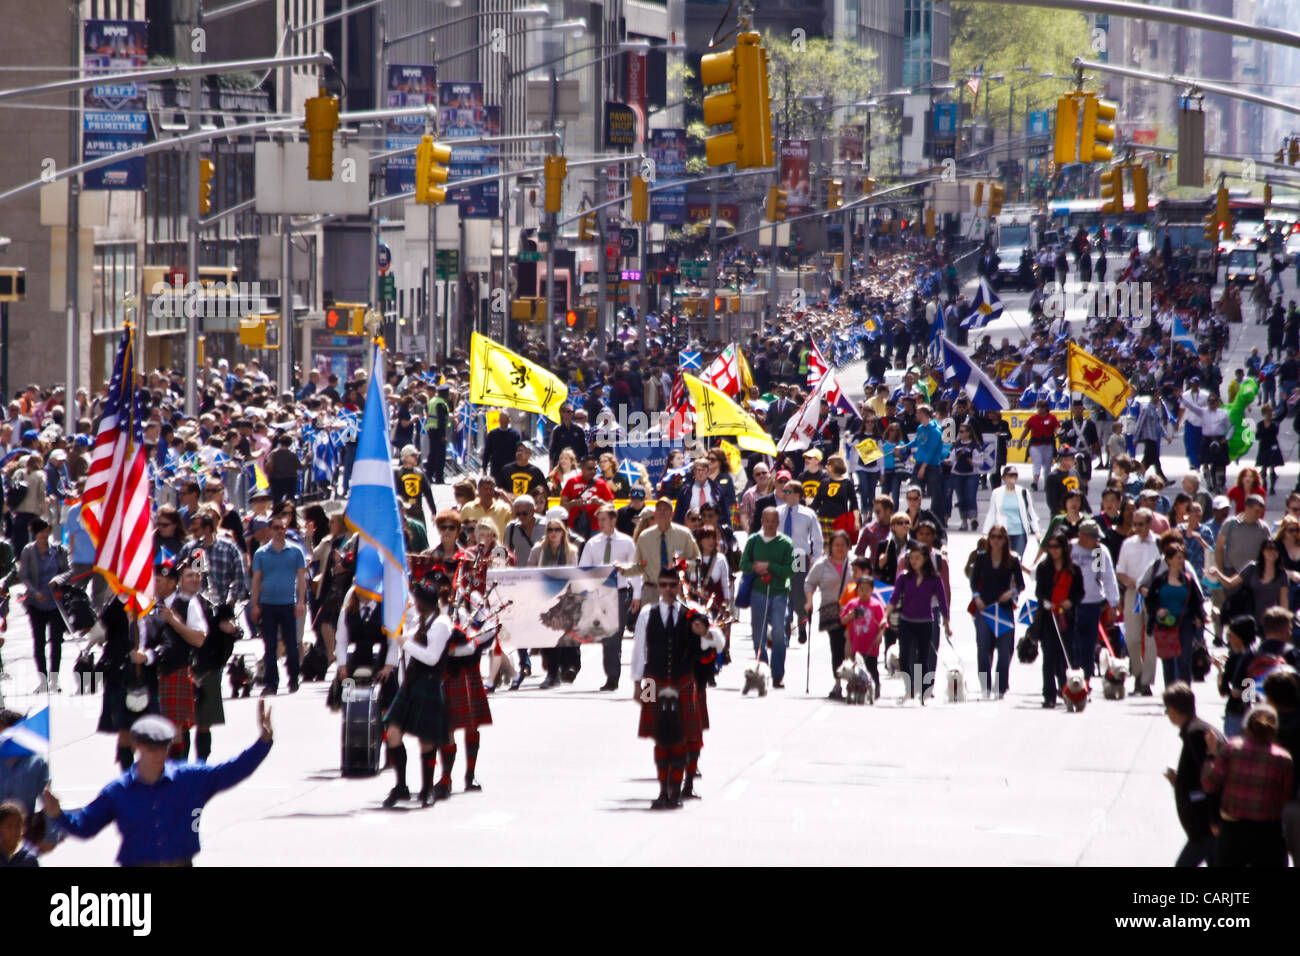 NEW YORK - 14. APRIL: Szenen aus Schottland Woche Parade auf der 6th Avenue 14. April 2011 in New York, NY. (Foto von Donald Bowers) Stockfoto